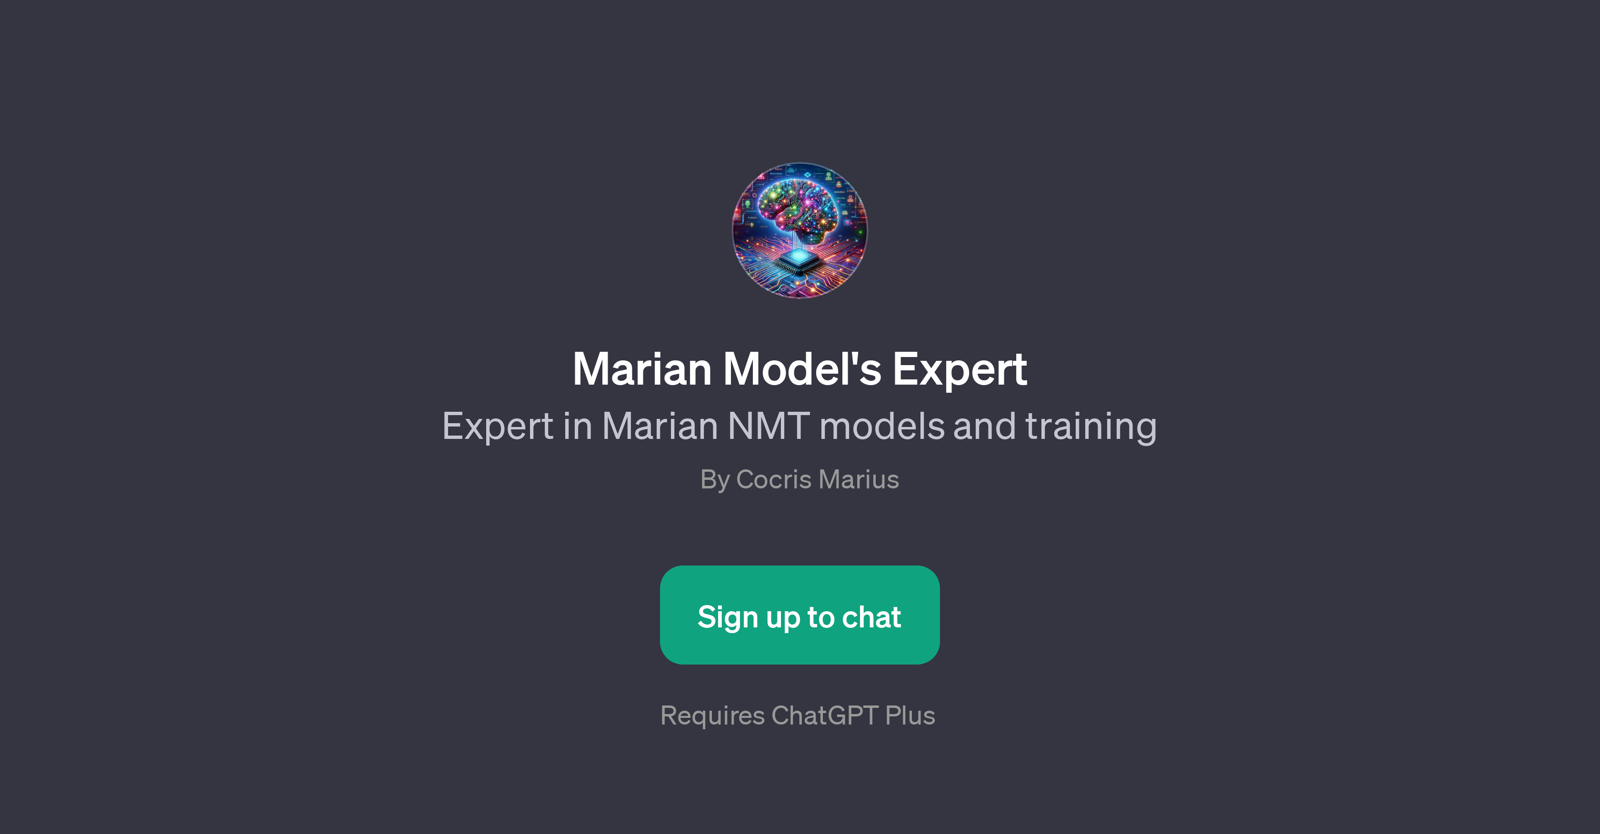 Marian Model's Expert website